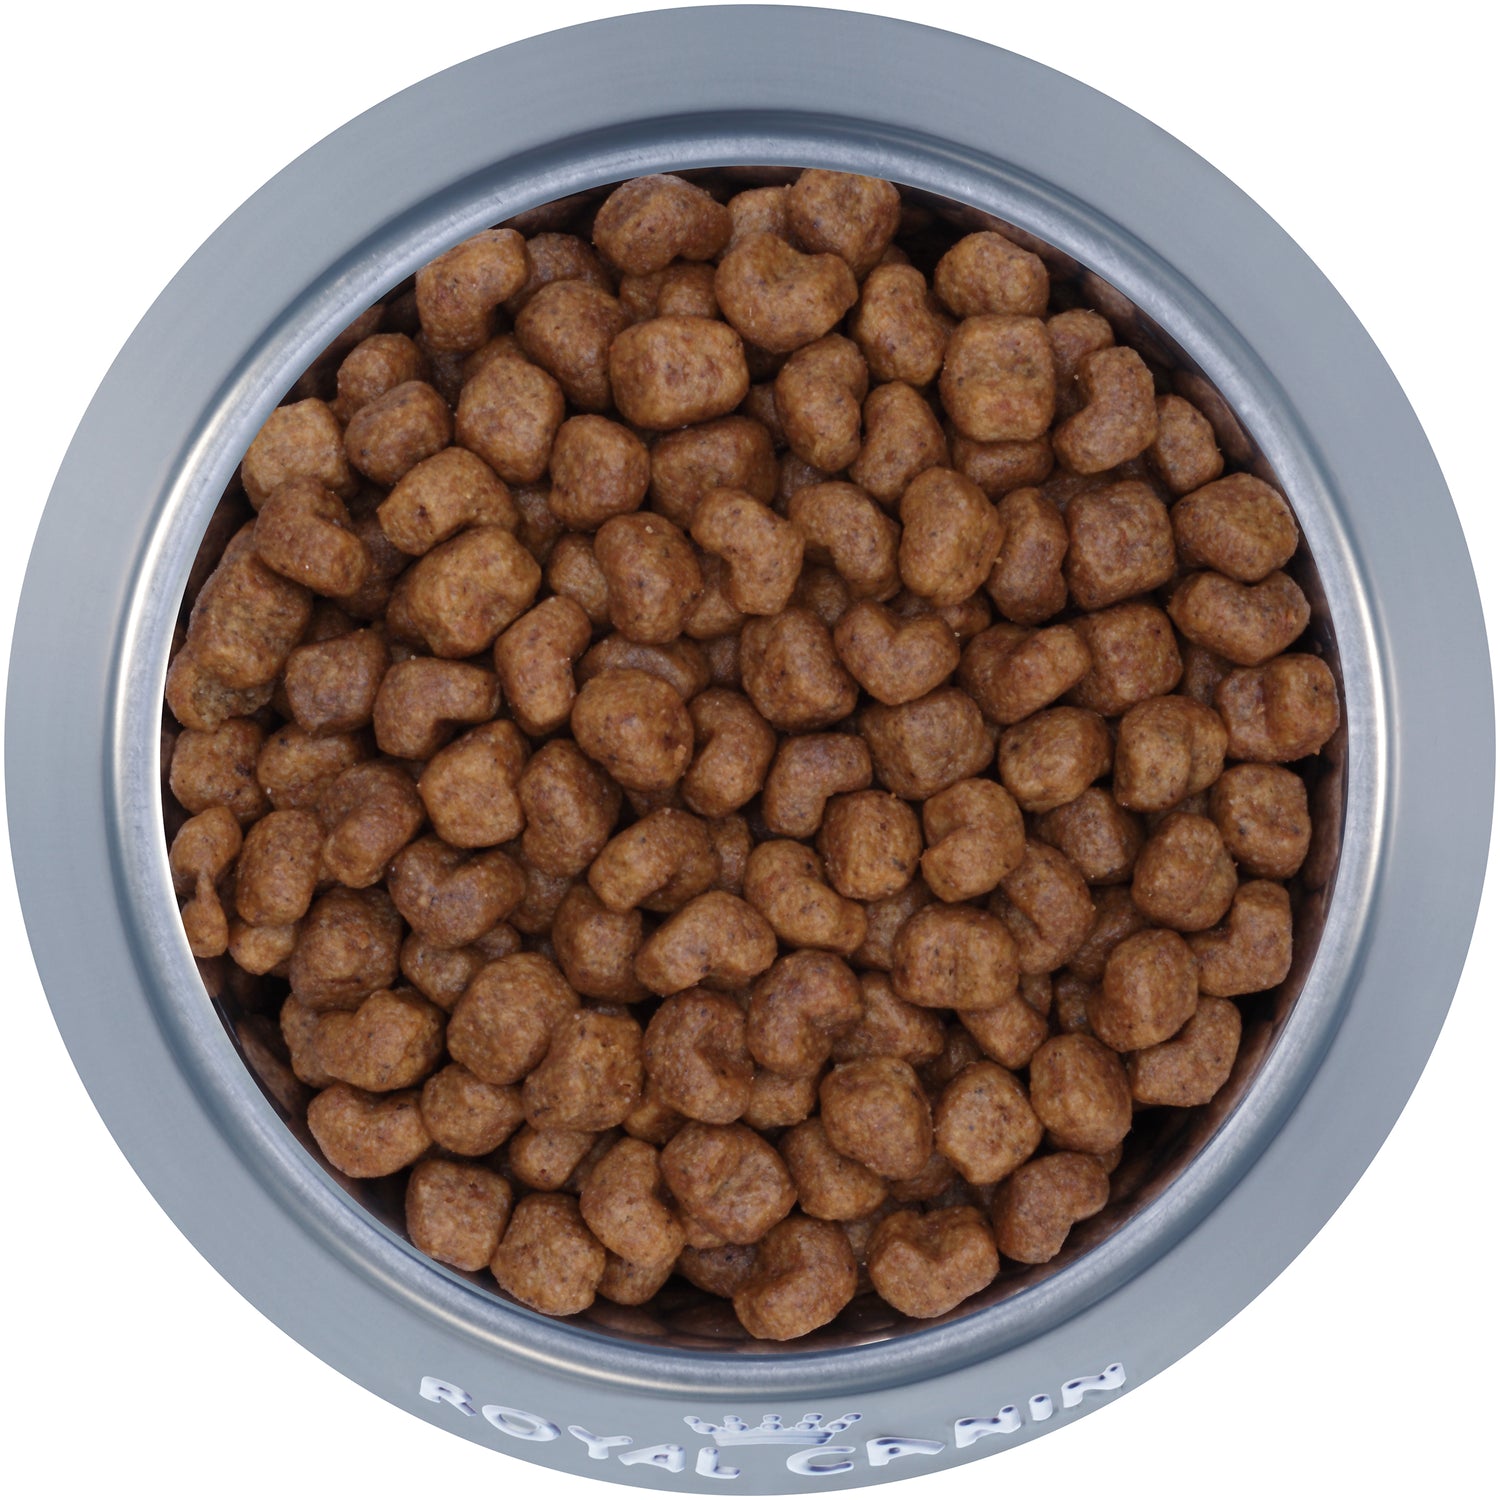 Royal Canin® Breed Health Nutrition® Shih Tzu Adult Dry Dog Food